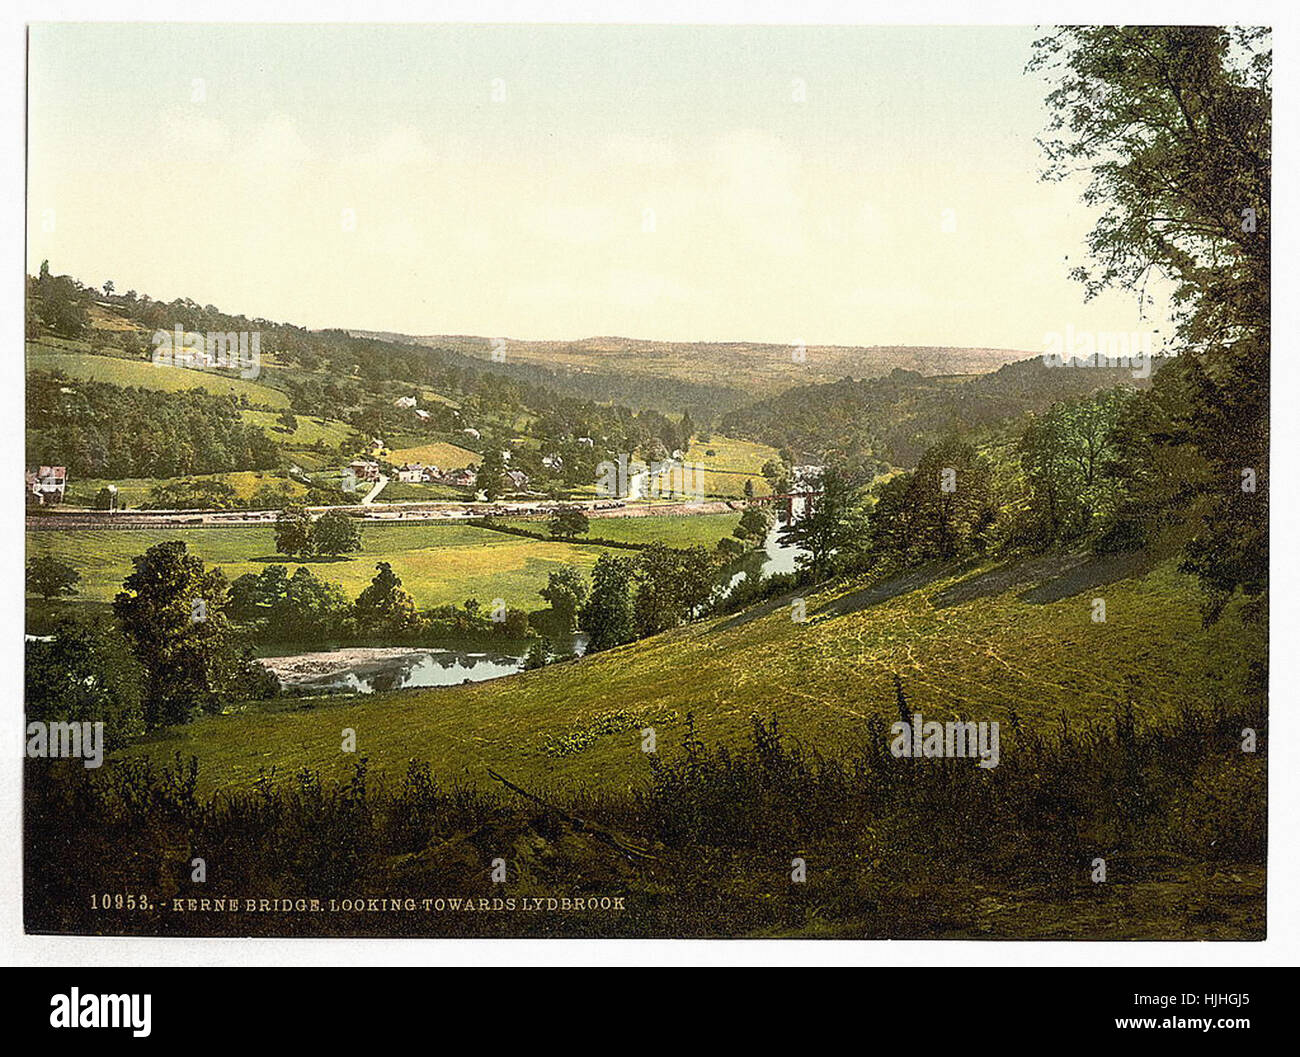 Blick in Richtung Lydbrook, Kern Bridge, England - Photochrom XIXth Jahrhundert Stockfoto